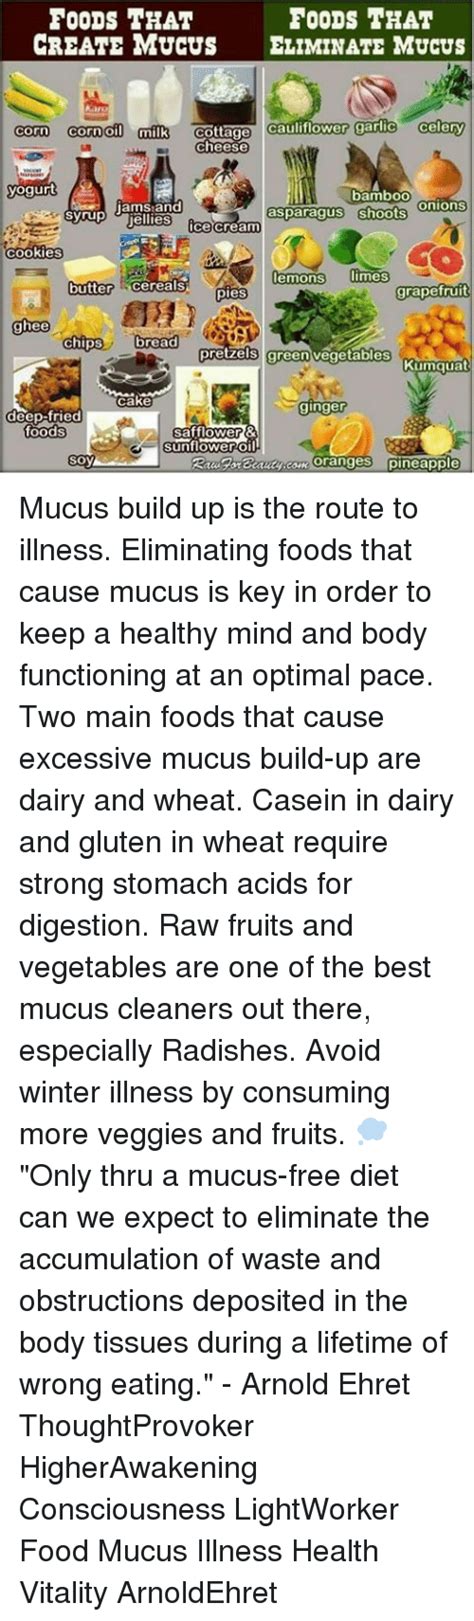 Foods That Foods That Create Mucus Eliminate Mucus Aaro Corn Corn Oil